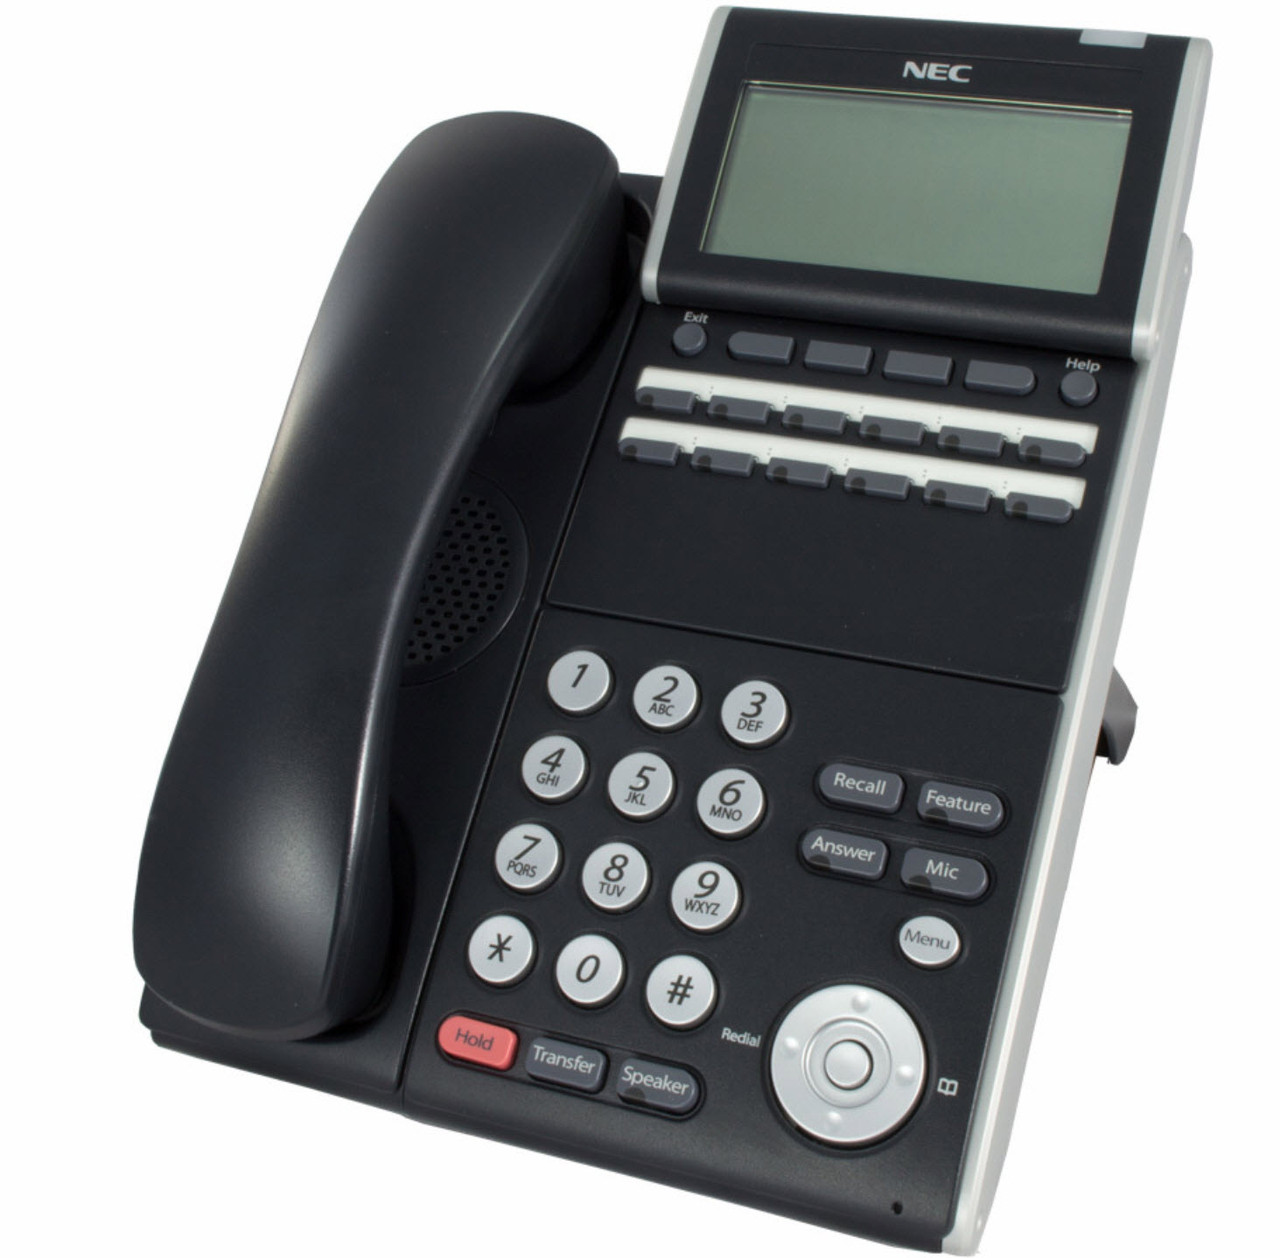 XD NEC DT300 Series Telephone Model DLV Z-Y BK DTL-12D-1 Black 